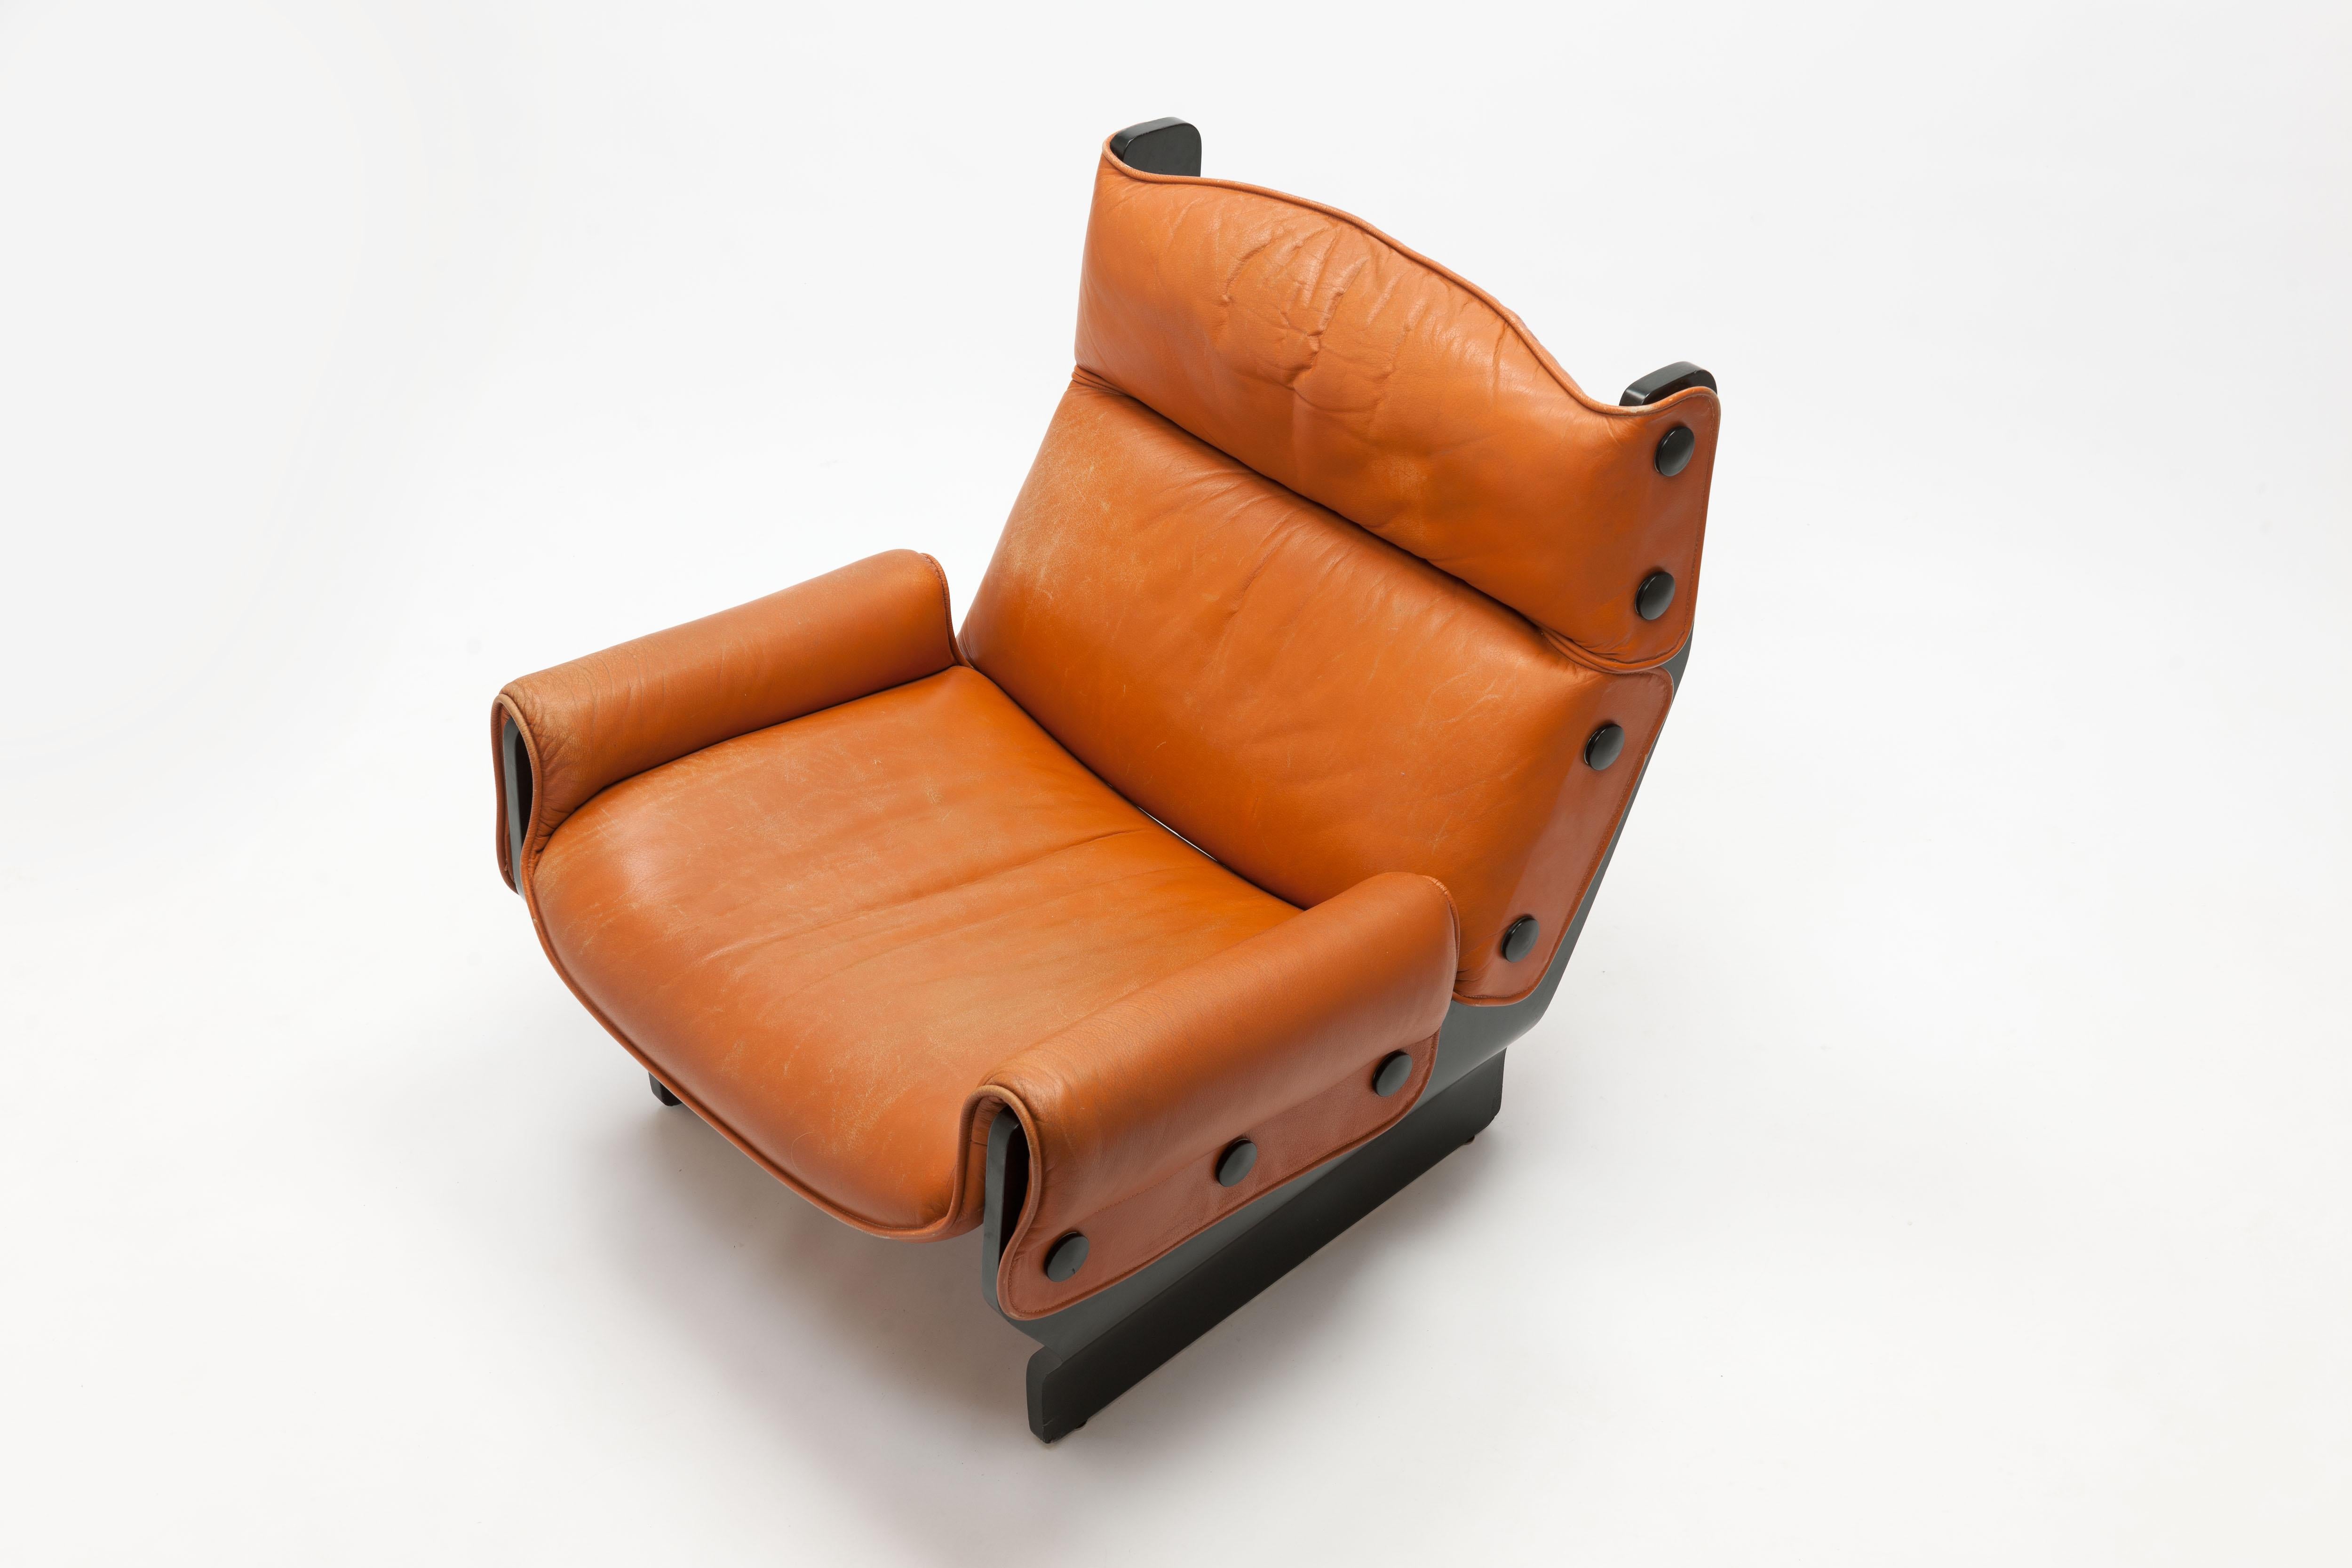 Painted Osvaldo Borsani 'Canada' Lounge Chair by Tecno in Original Leather